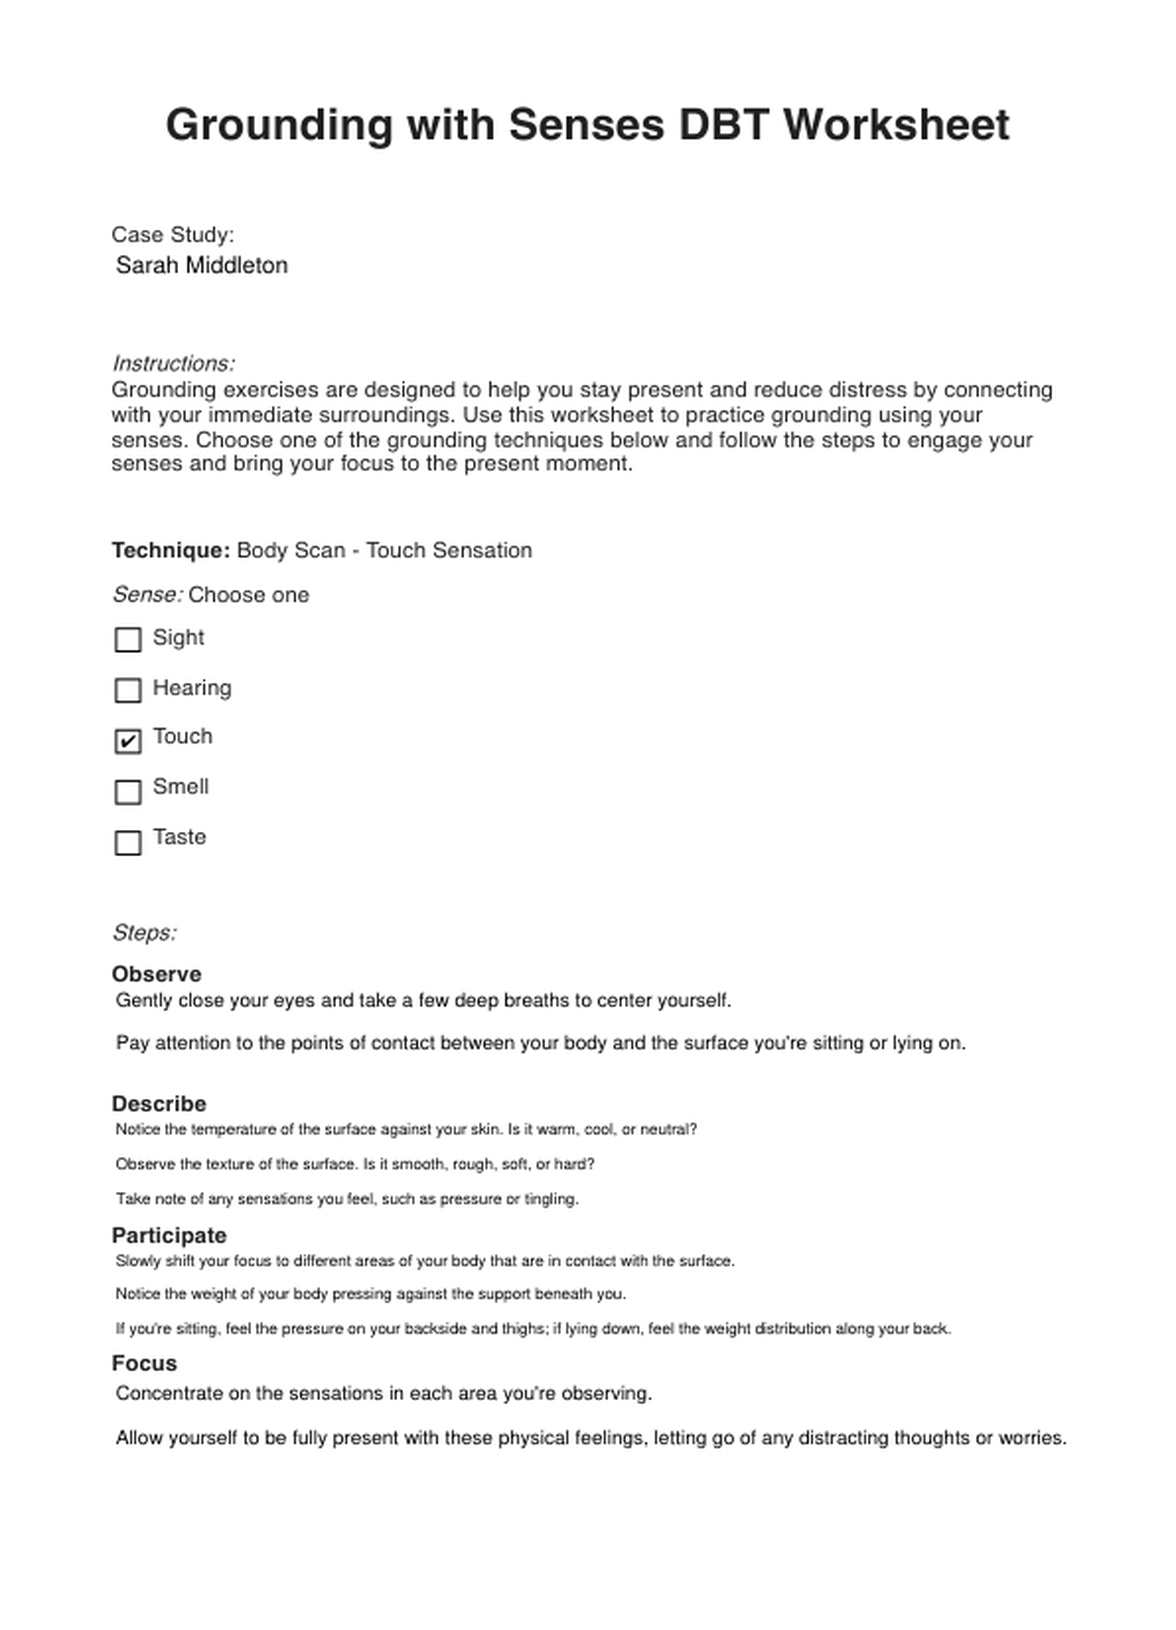 Grounding with Senses DBT Worksheet PDF Example